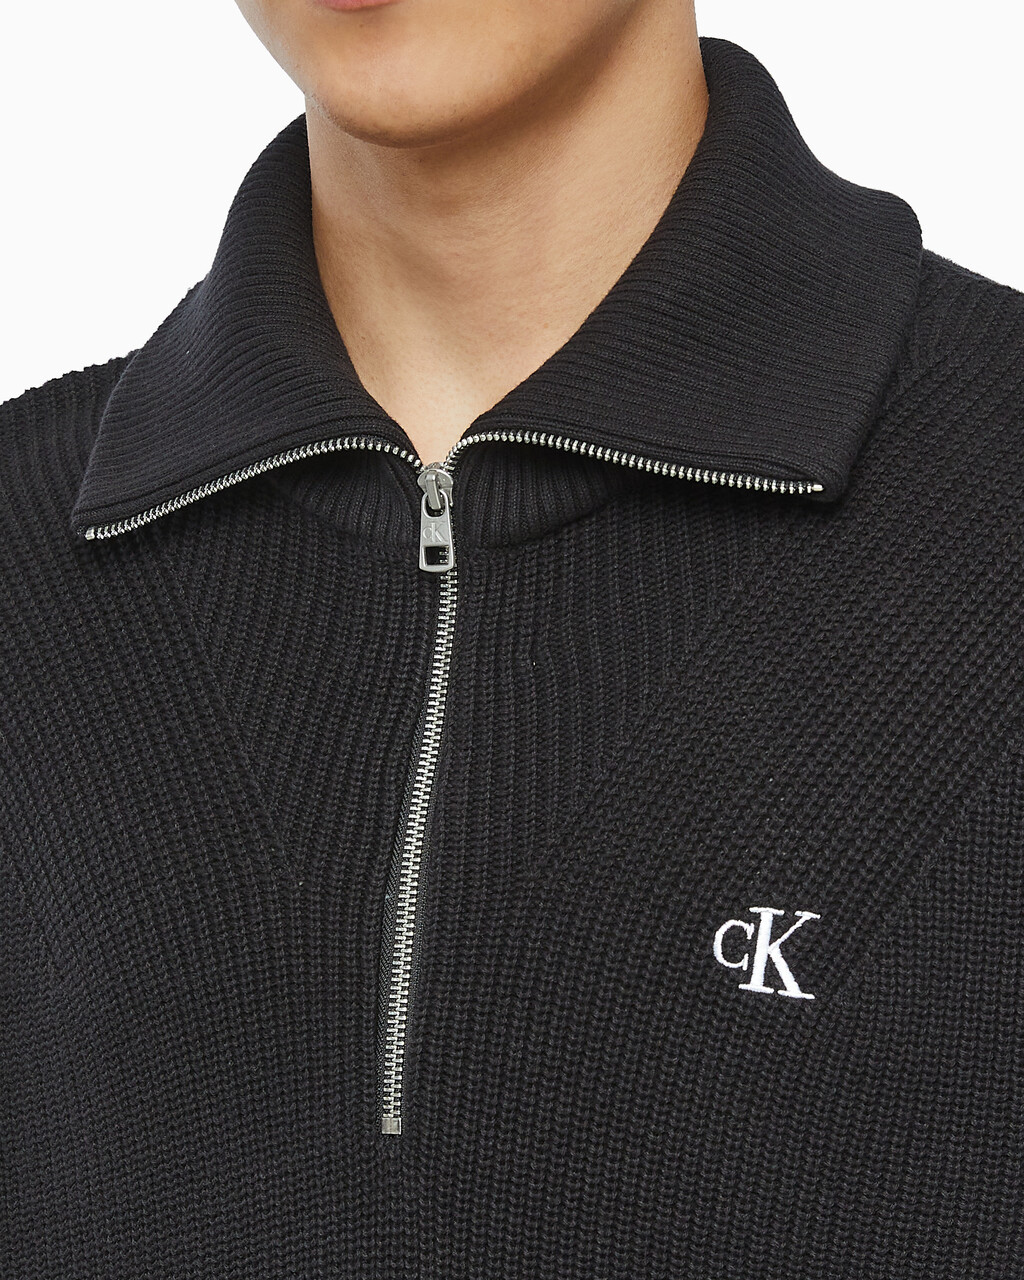 Buy 남성 하프 집업 풀오버 스웨터 in color CK BLACK